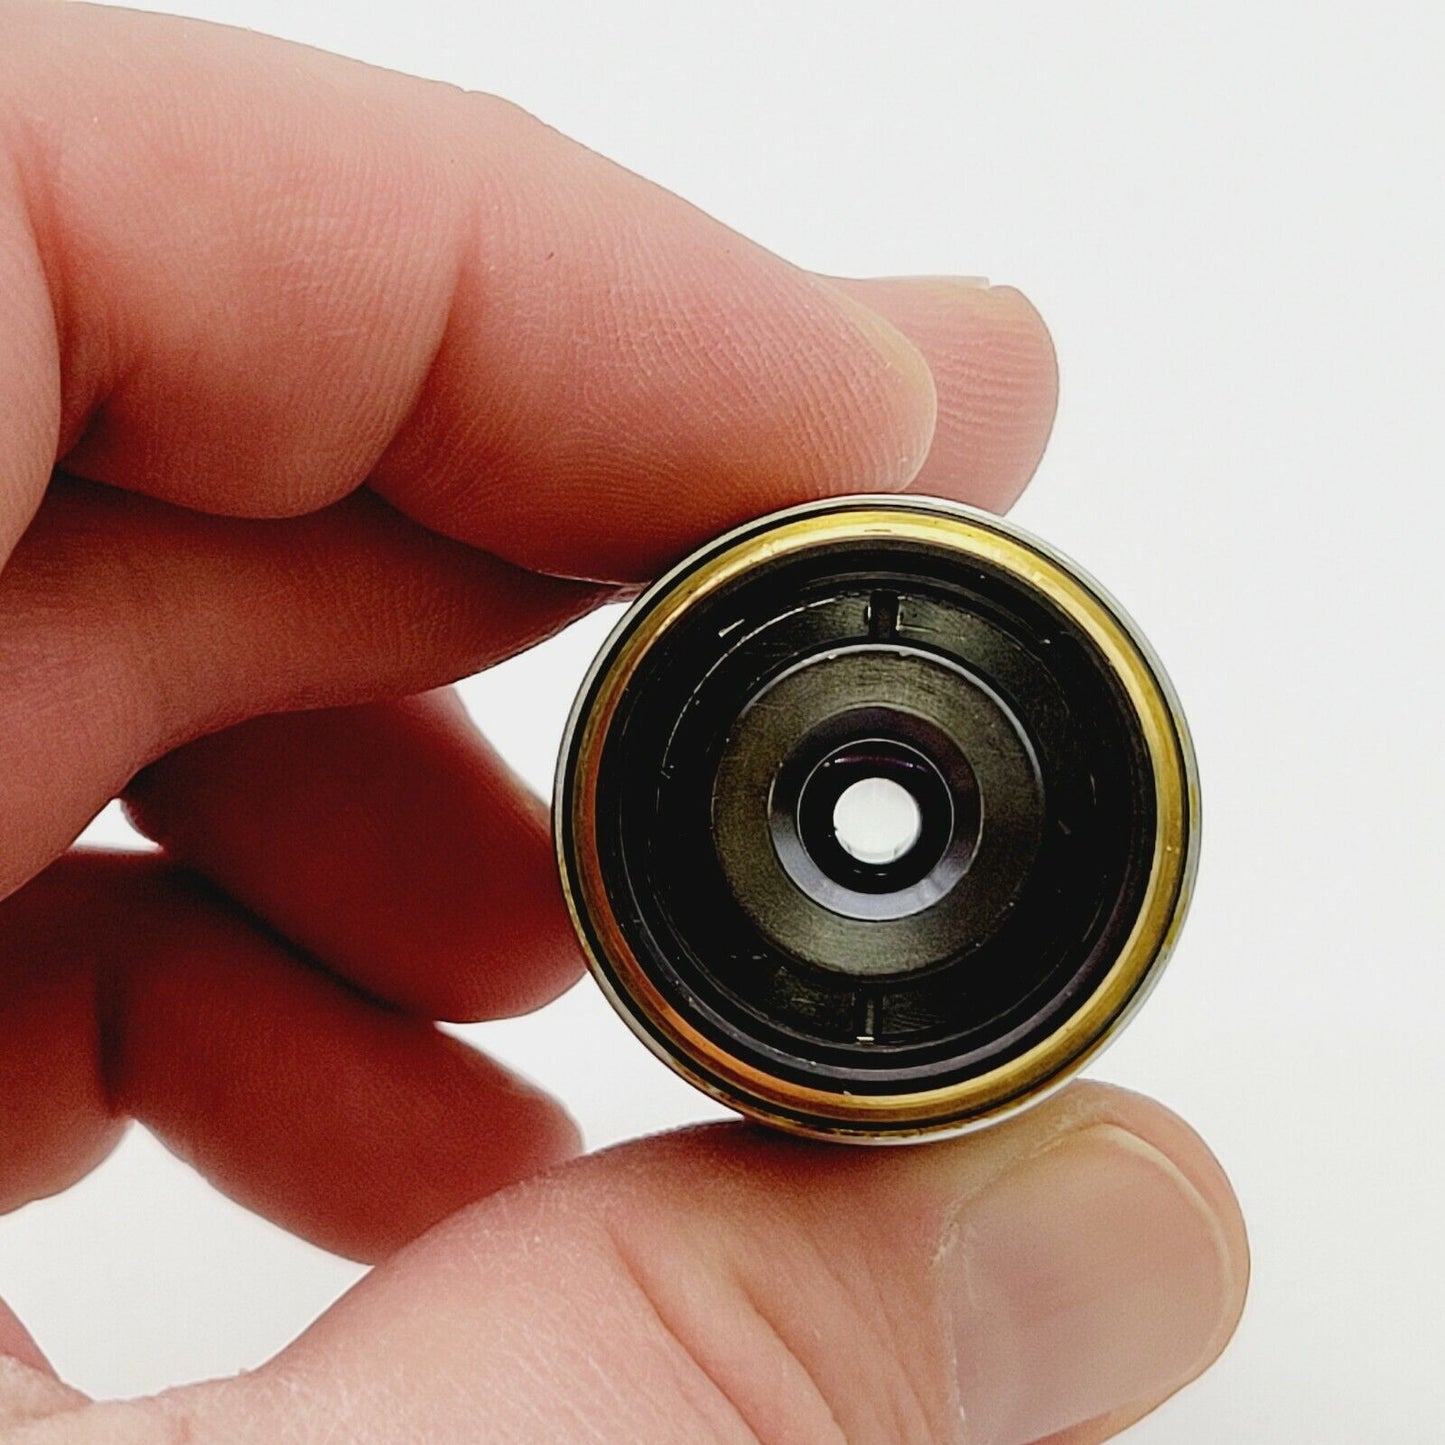 Leica Microscope Objective N Plan 100x 1.25 Oil ∞/-/D 506158 - microscopemarketplace